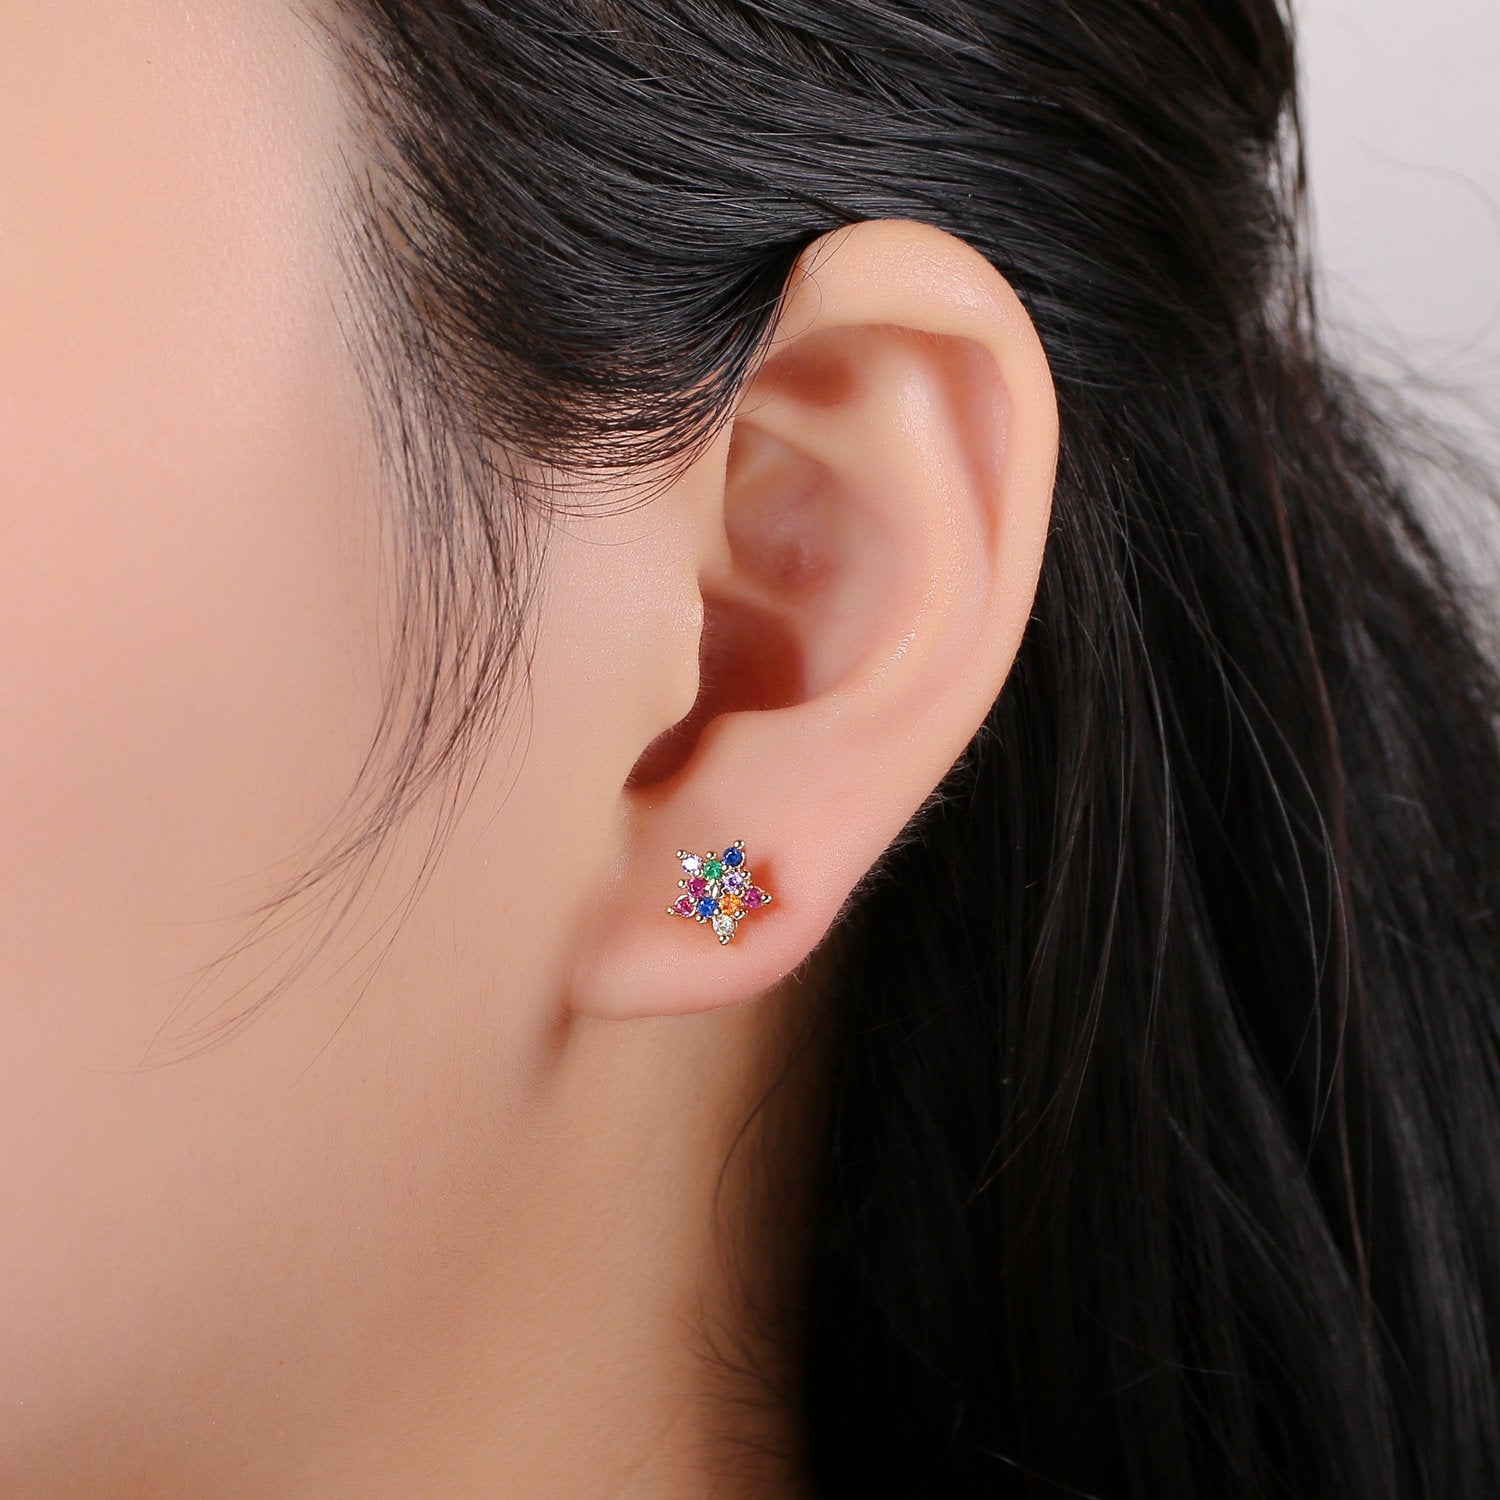 Star stud earrings Gold Multi Color Cz earrings, dainty Earring studs, tiny studs gold, tiny earrings, Multi Color studs - DLUXCA